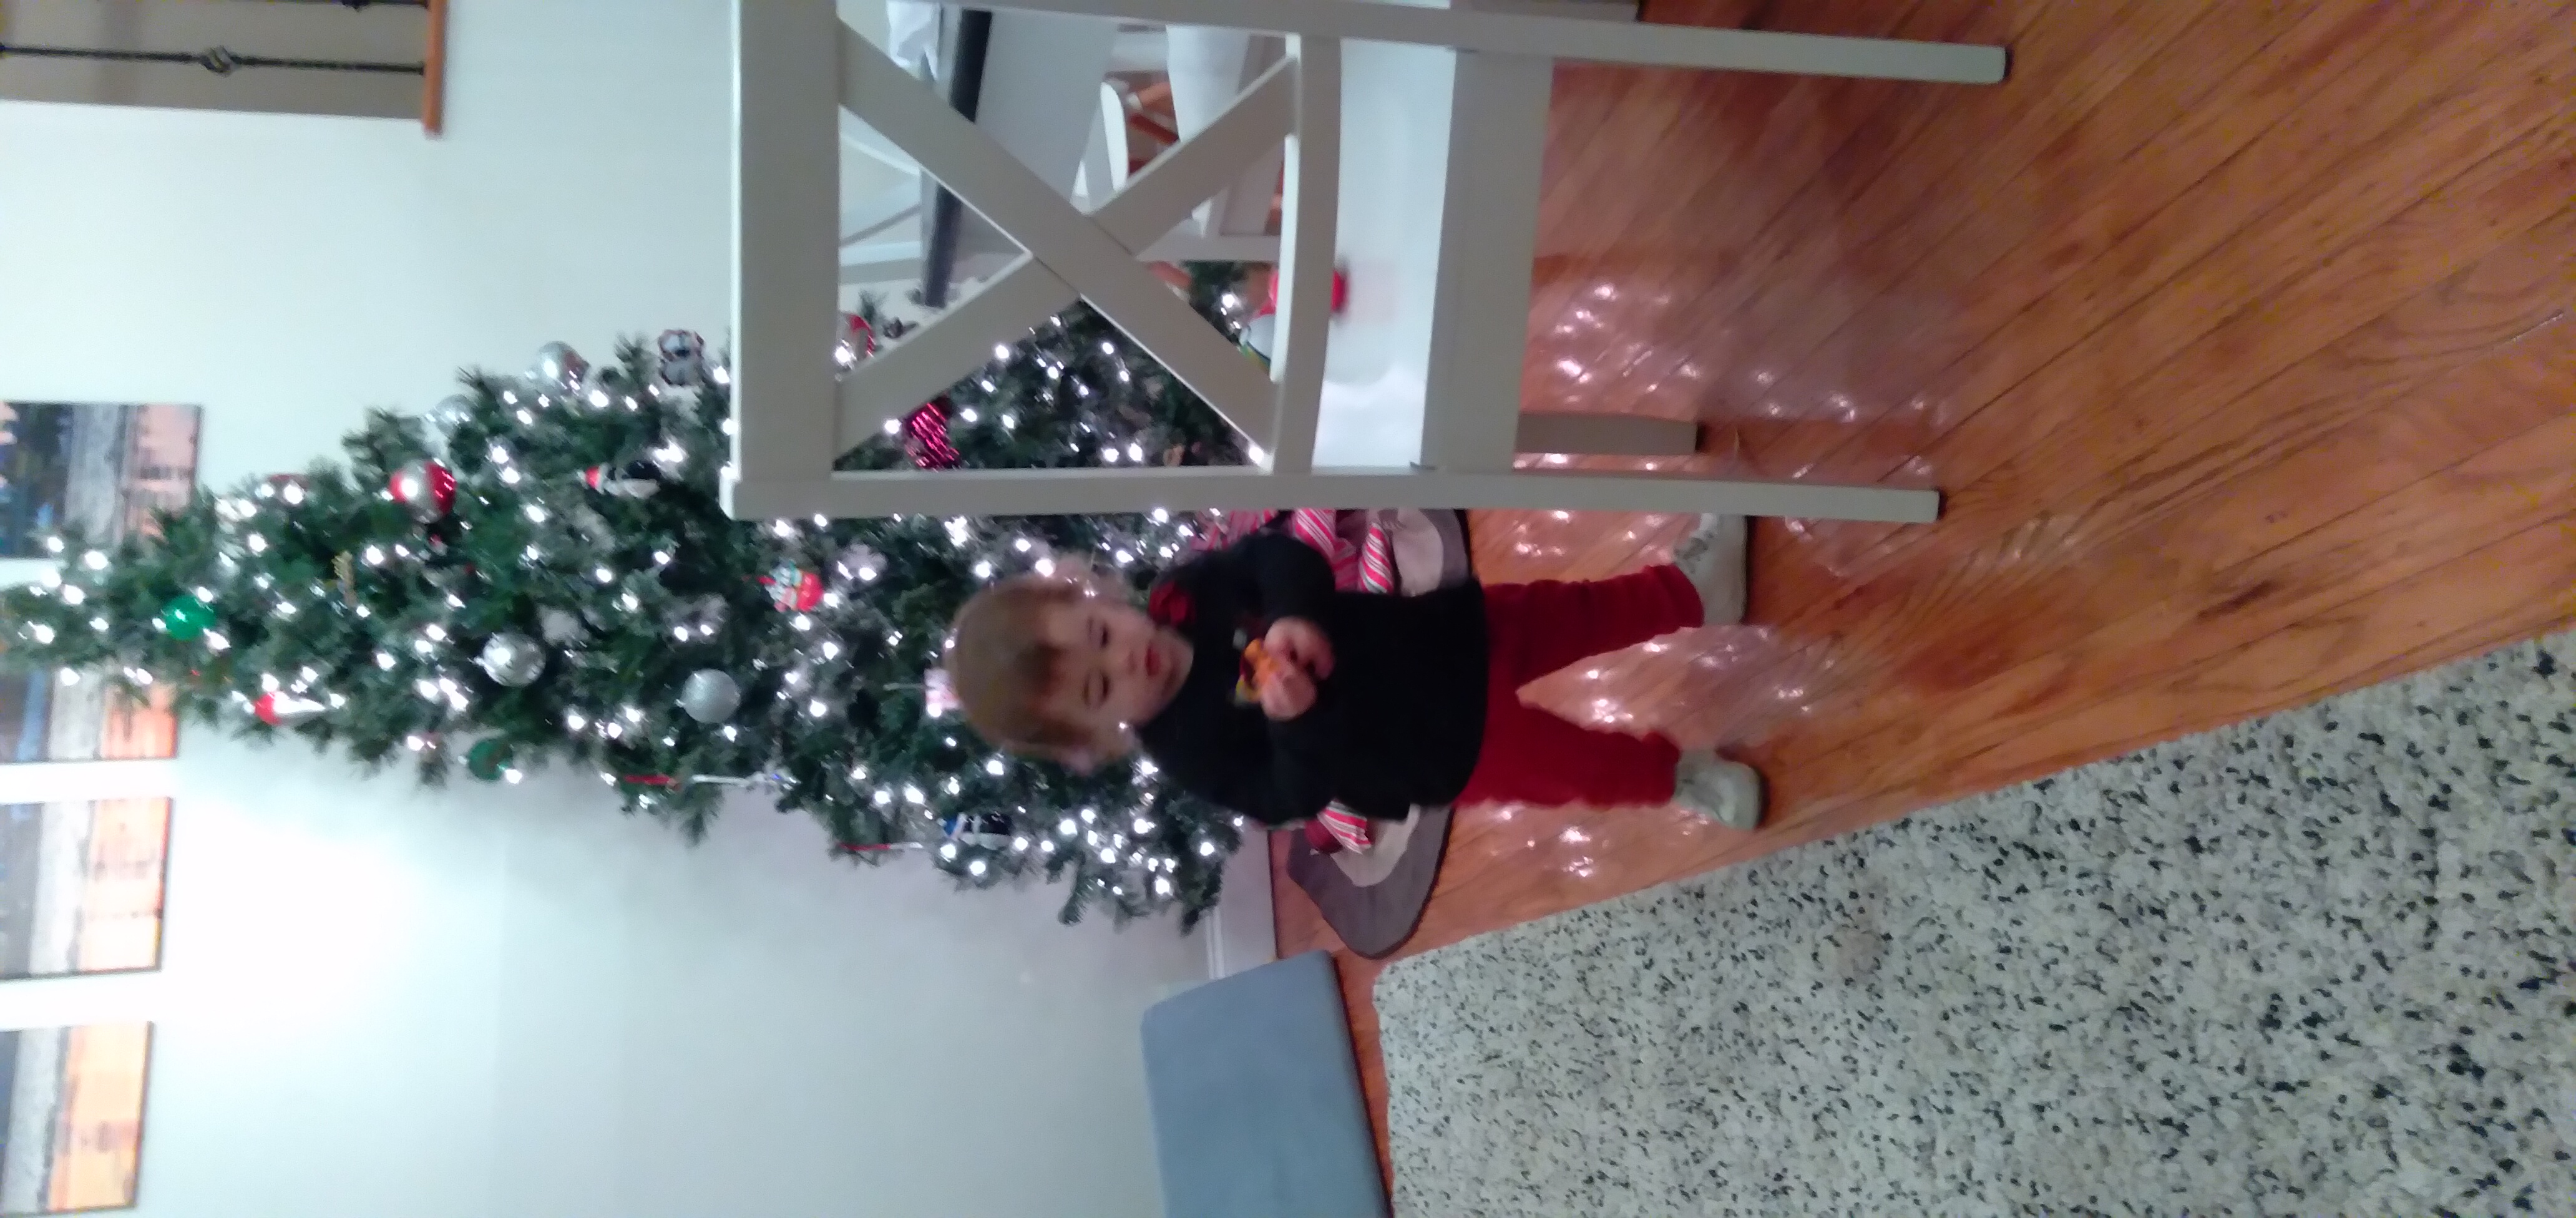 Aurora and Her Christmas Tree